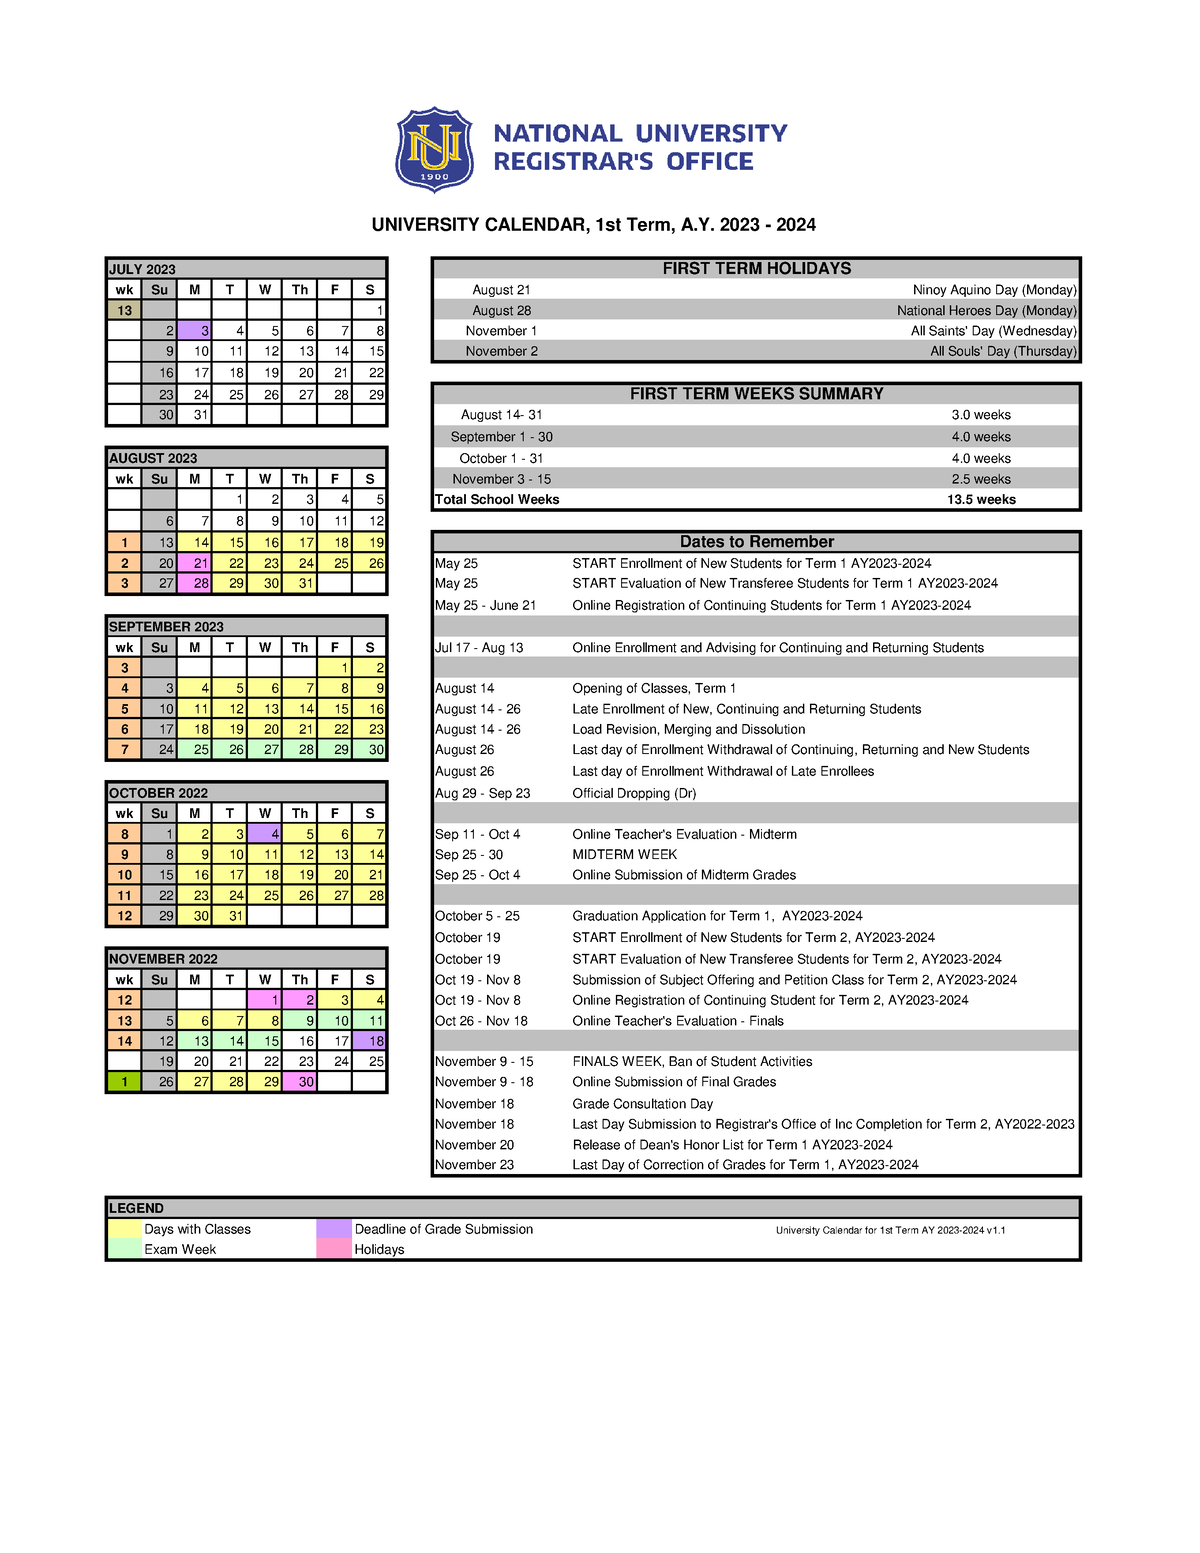 University Calendar (1st Term) - wk Su M T W Th F S August 21 13 1 ...